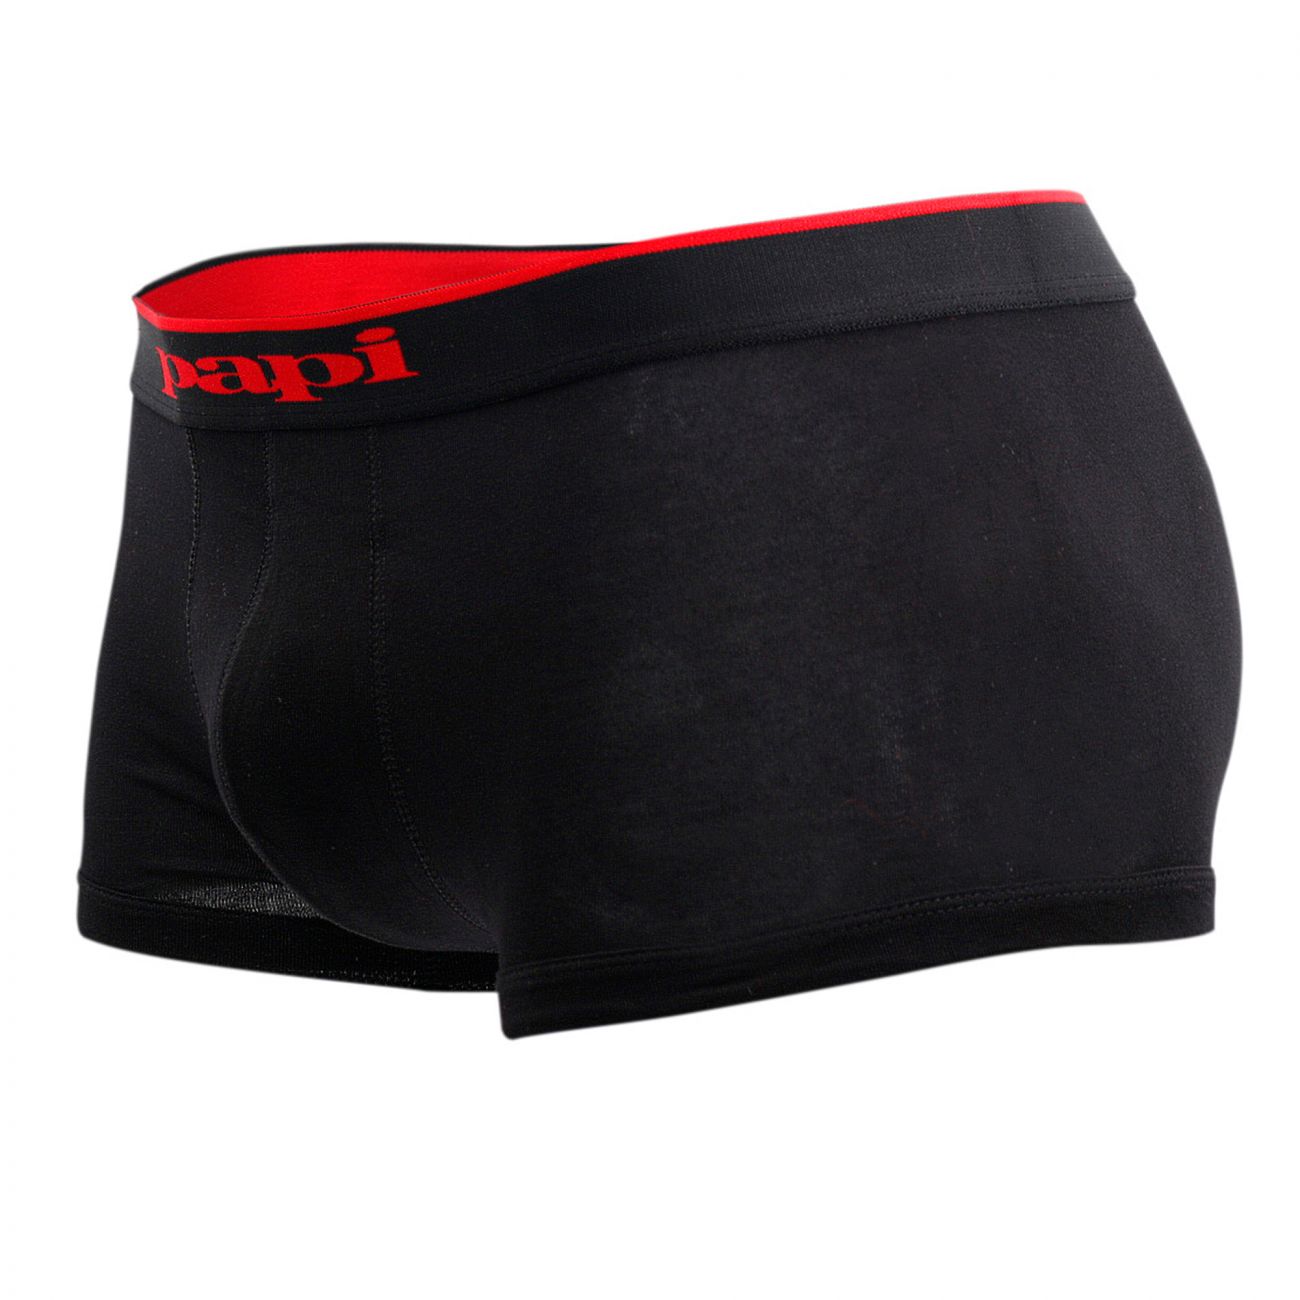 Brazil Style Underwear at Rs 508/piece